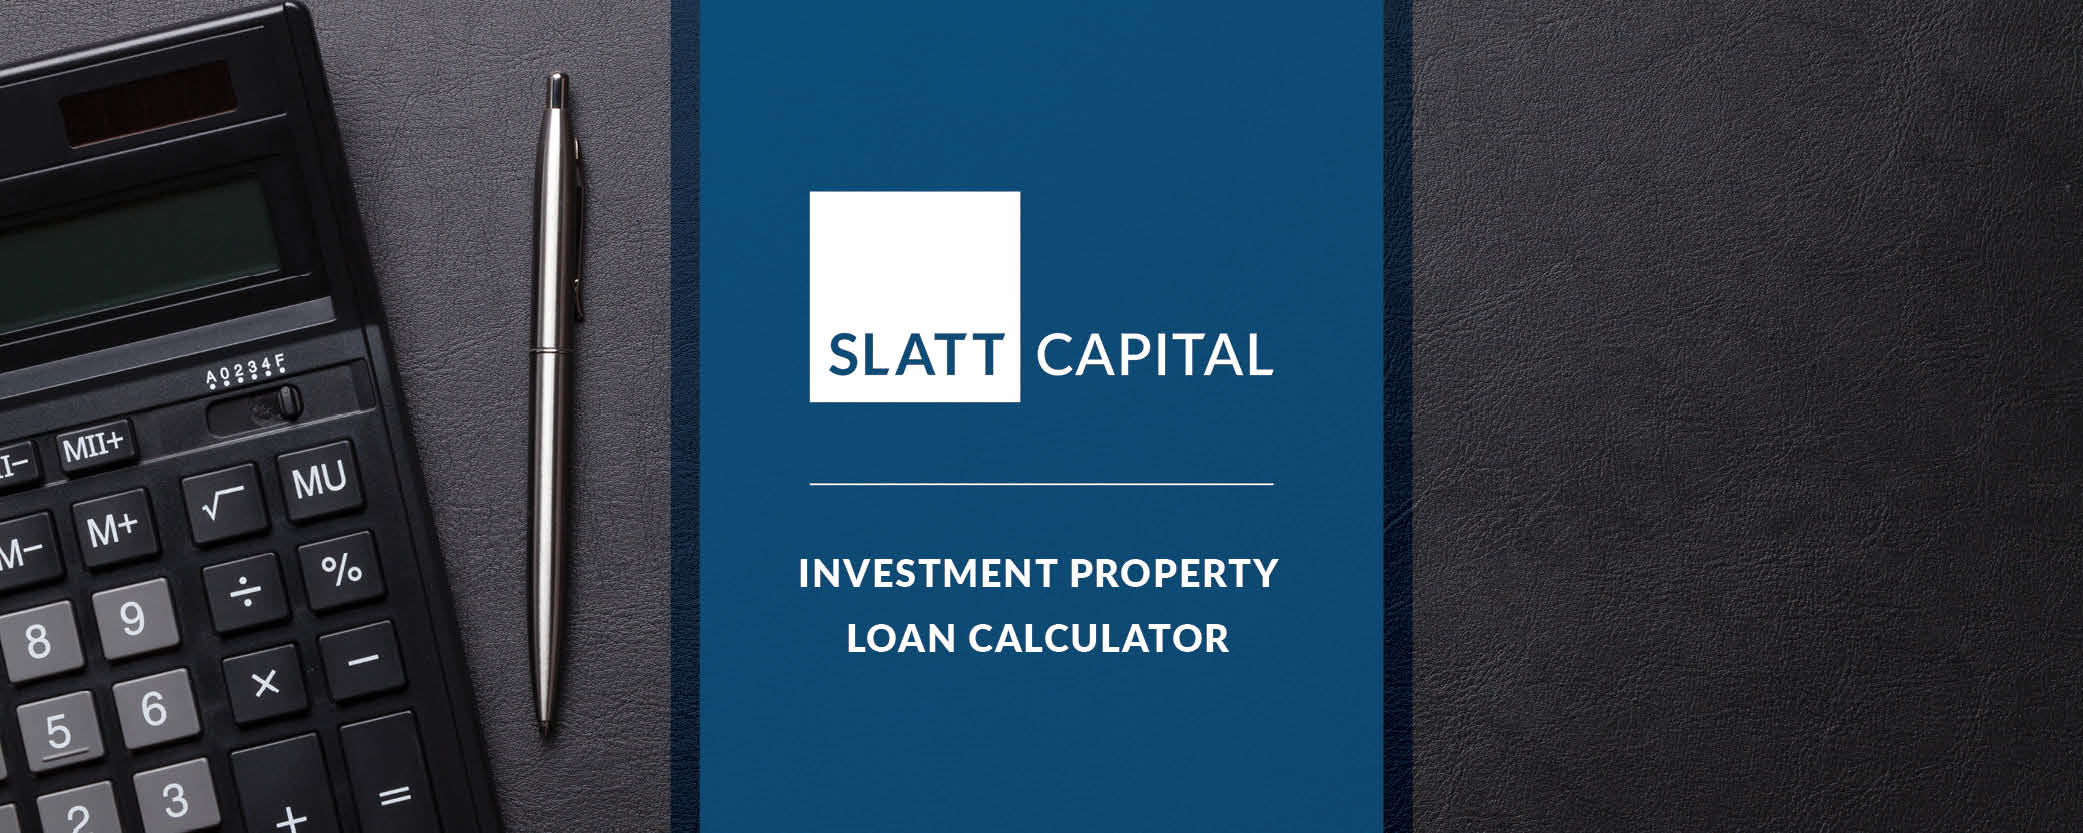 Slatt capital’s latest tool – investment property loan calculator